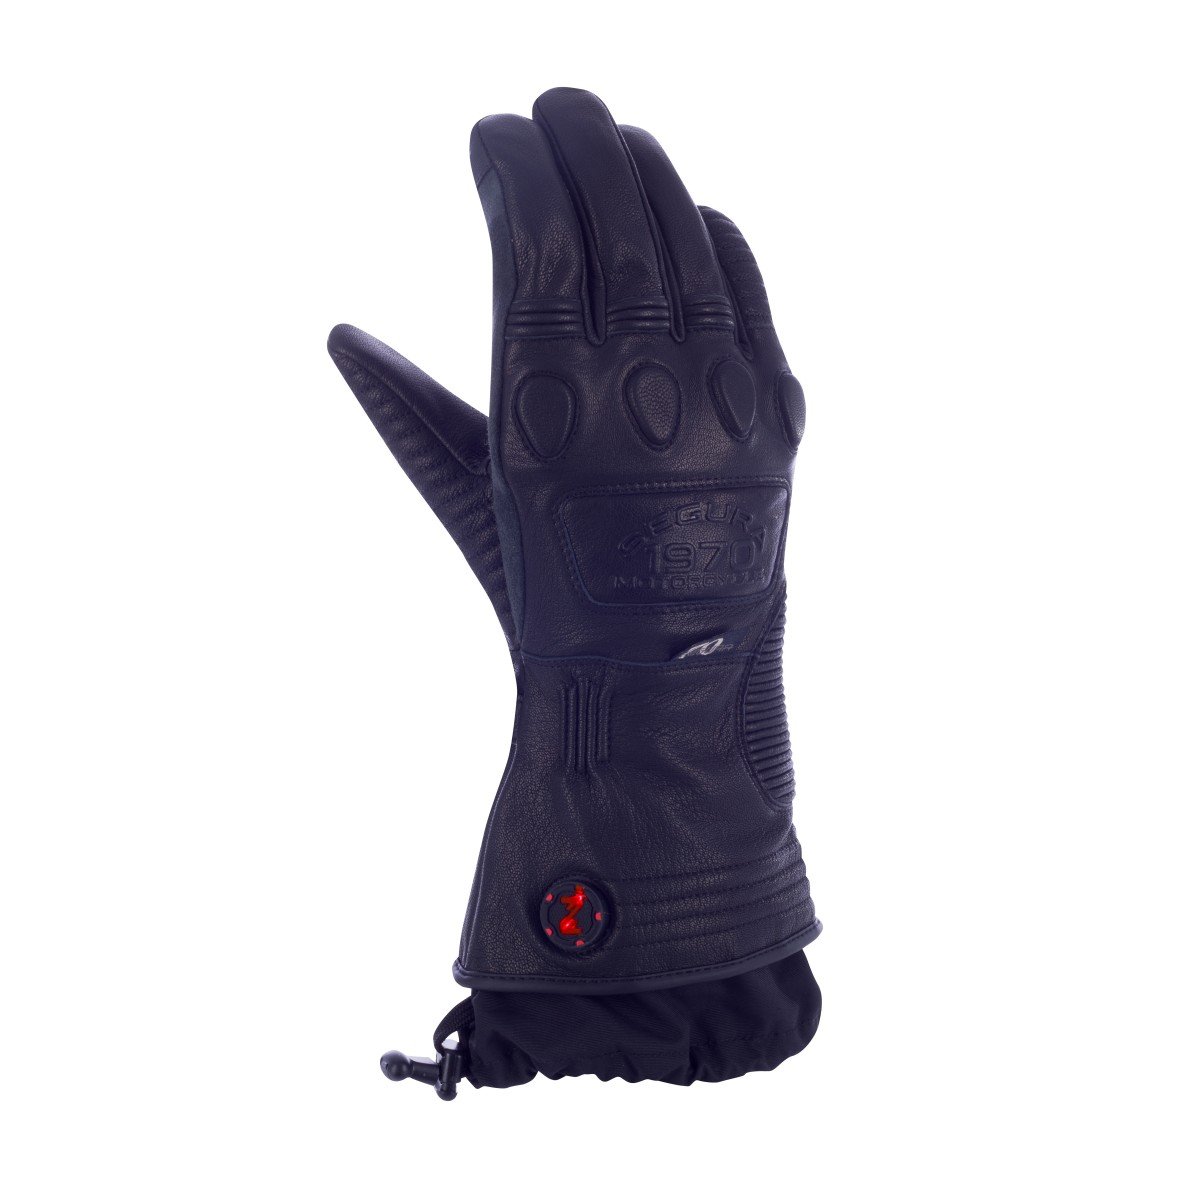 Image of Segura Shiro Black Heated Gloves Size T12 ID 3660815151853